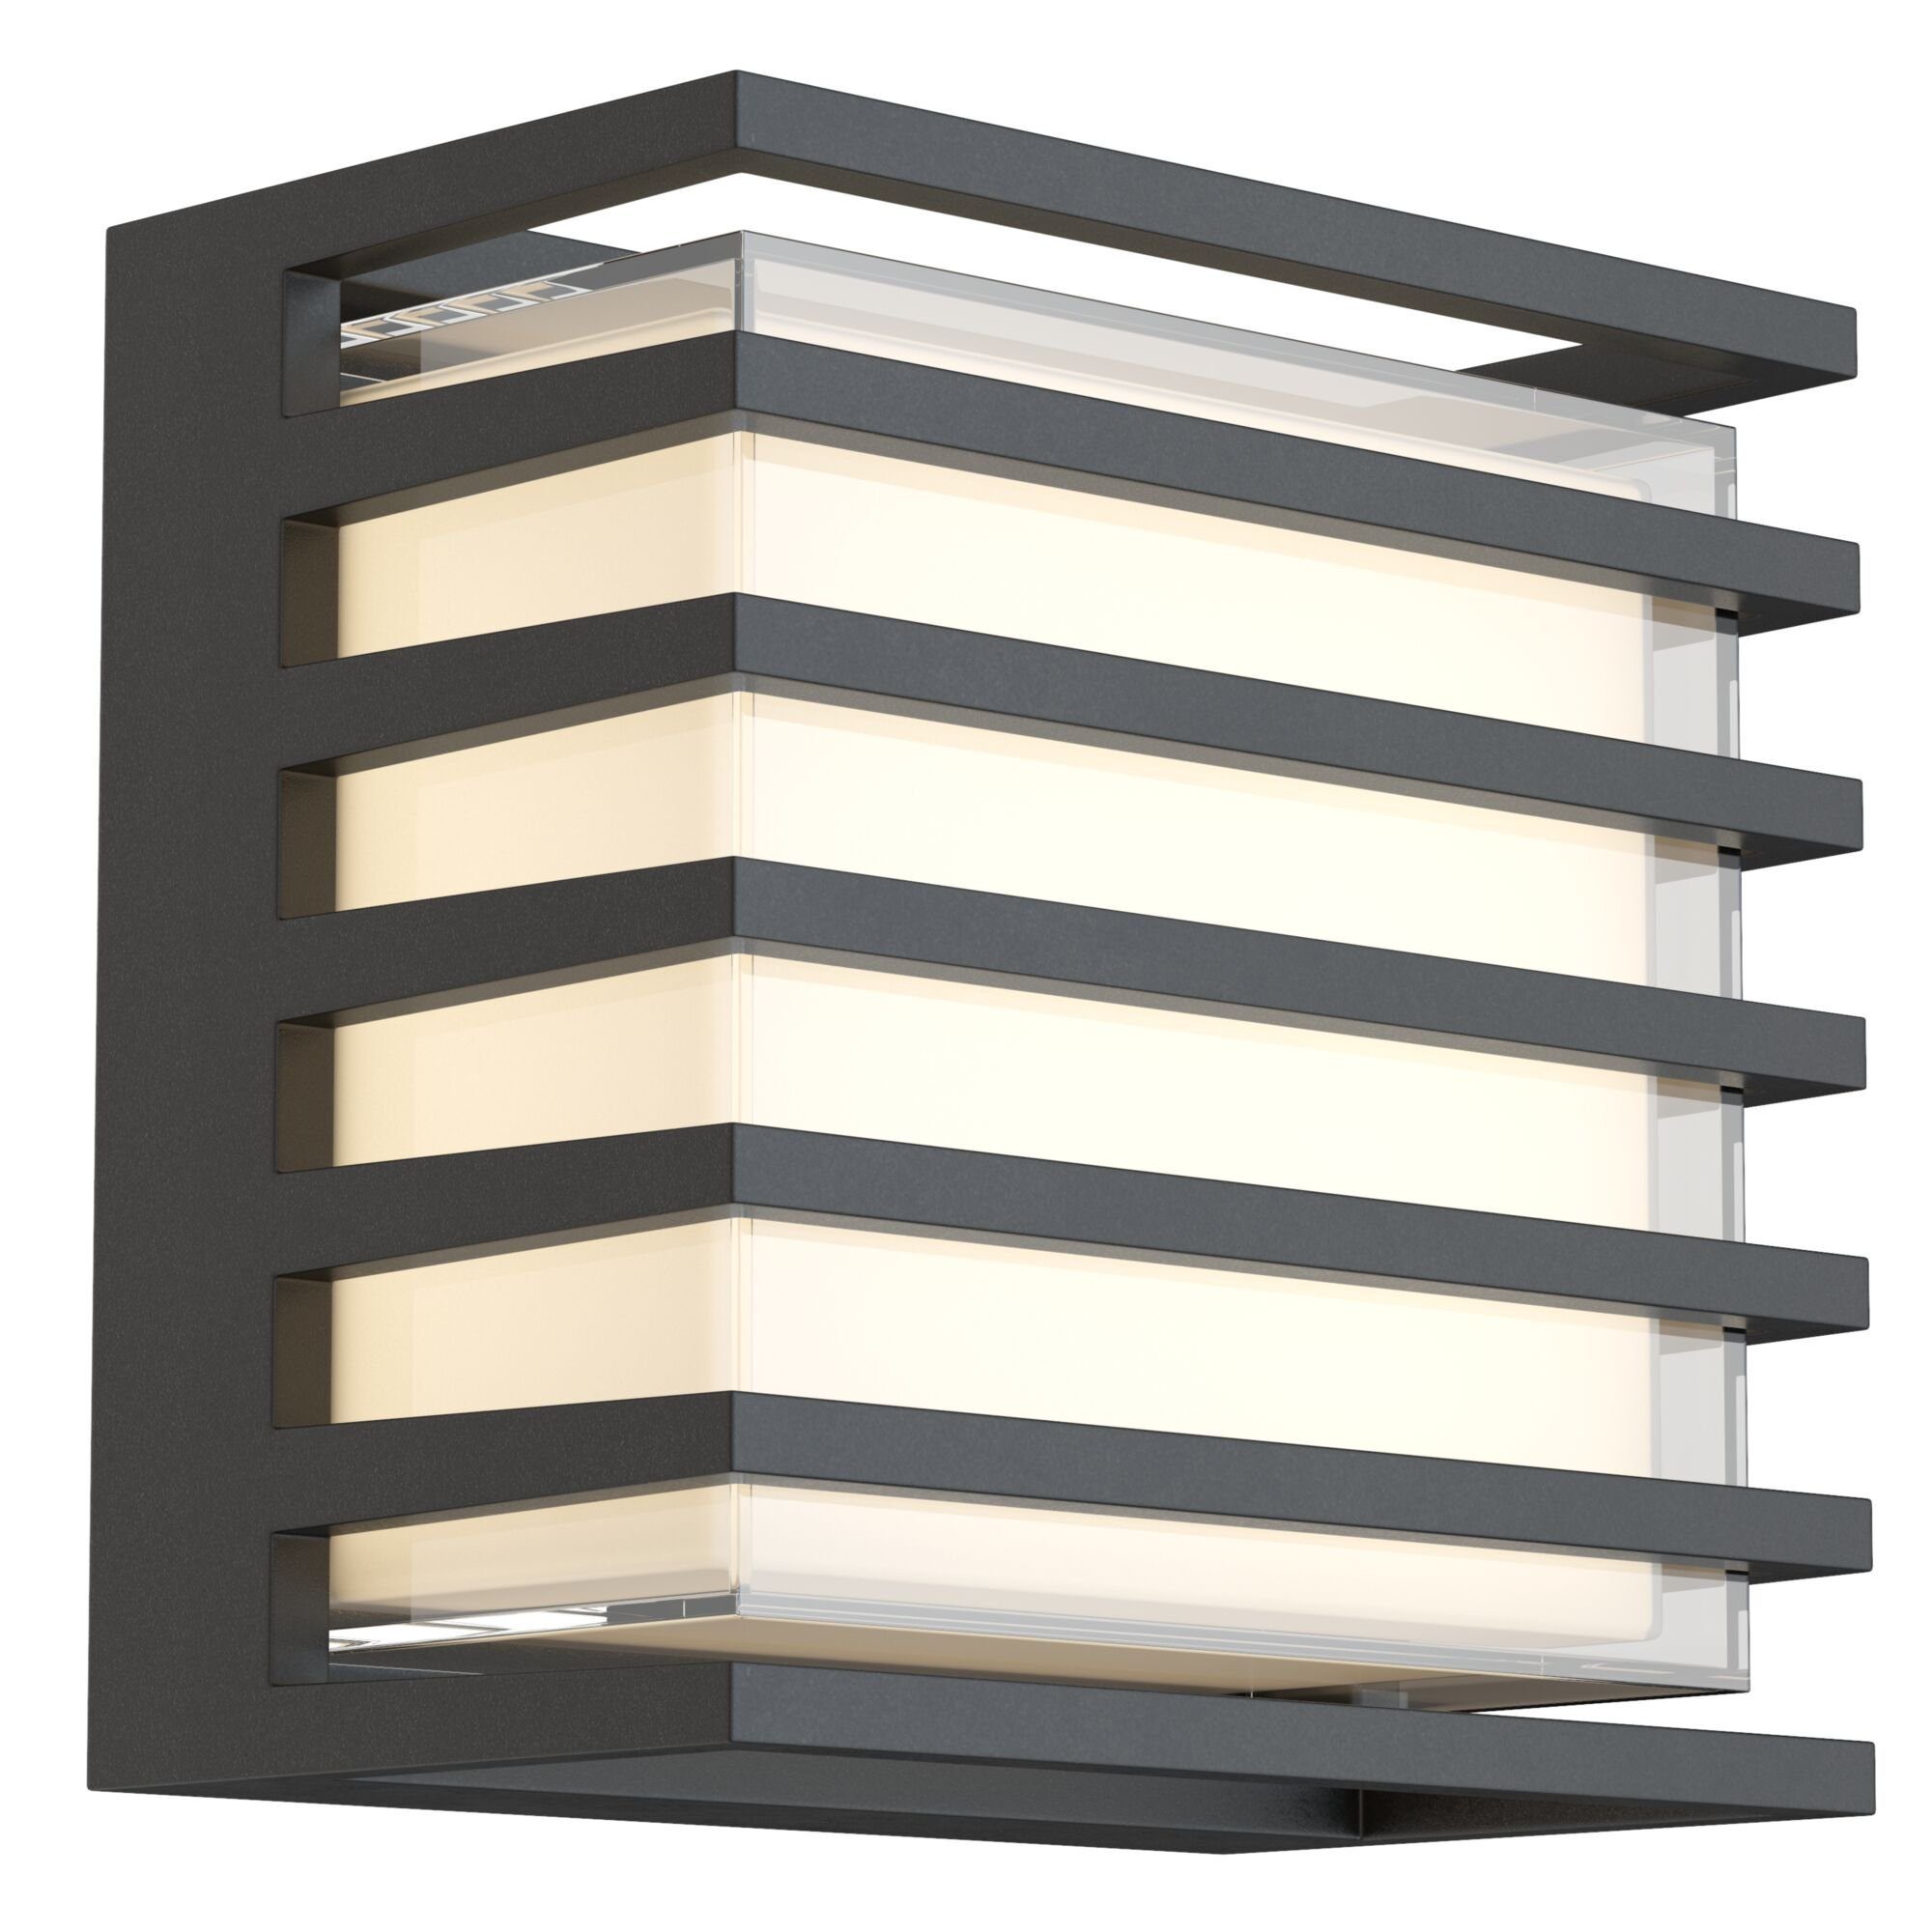 MAYTONI DECORATIVE LIGHTING Wandleuchte Downing Street 16.6x16.6x10 cm, LED fest integriert, hochwertige Design Lampe & dekoratives Raumobjekt